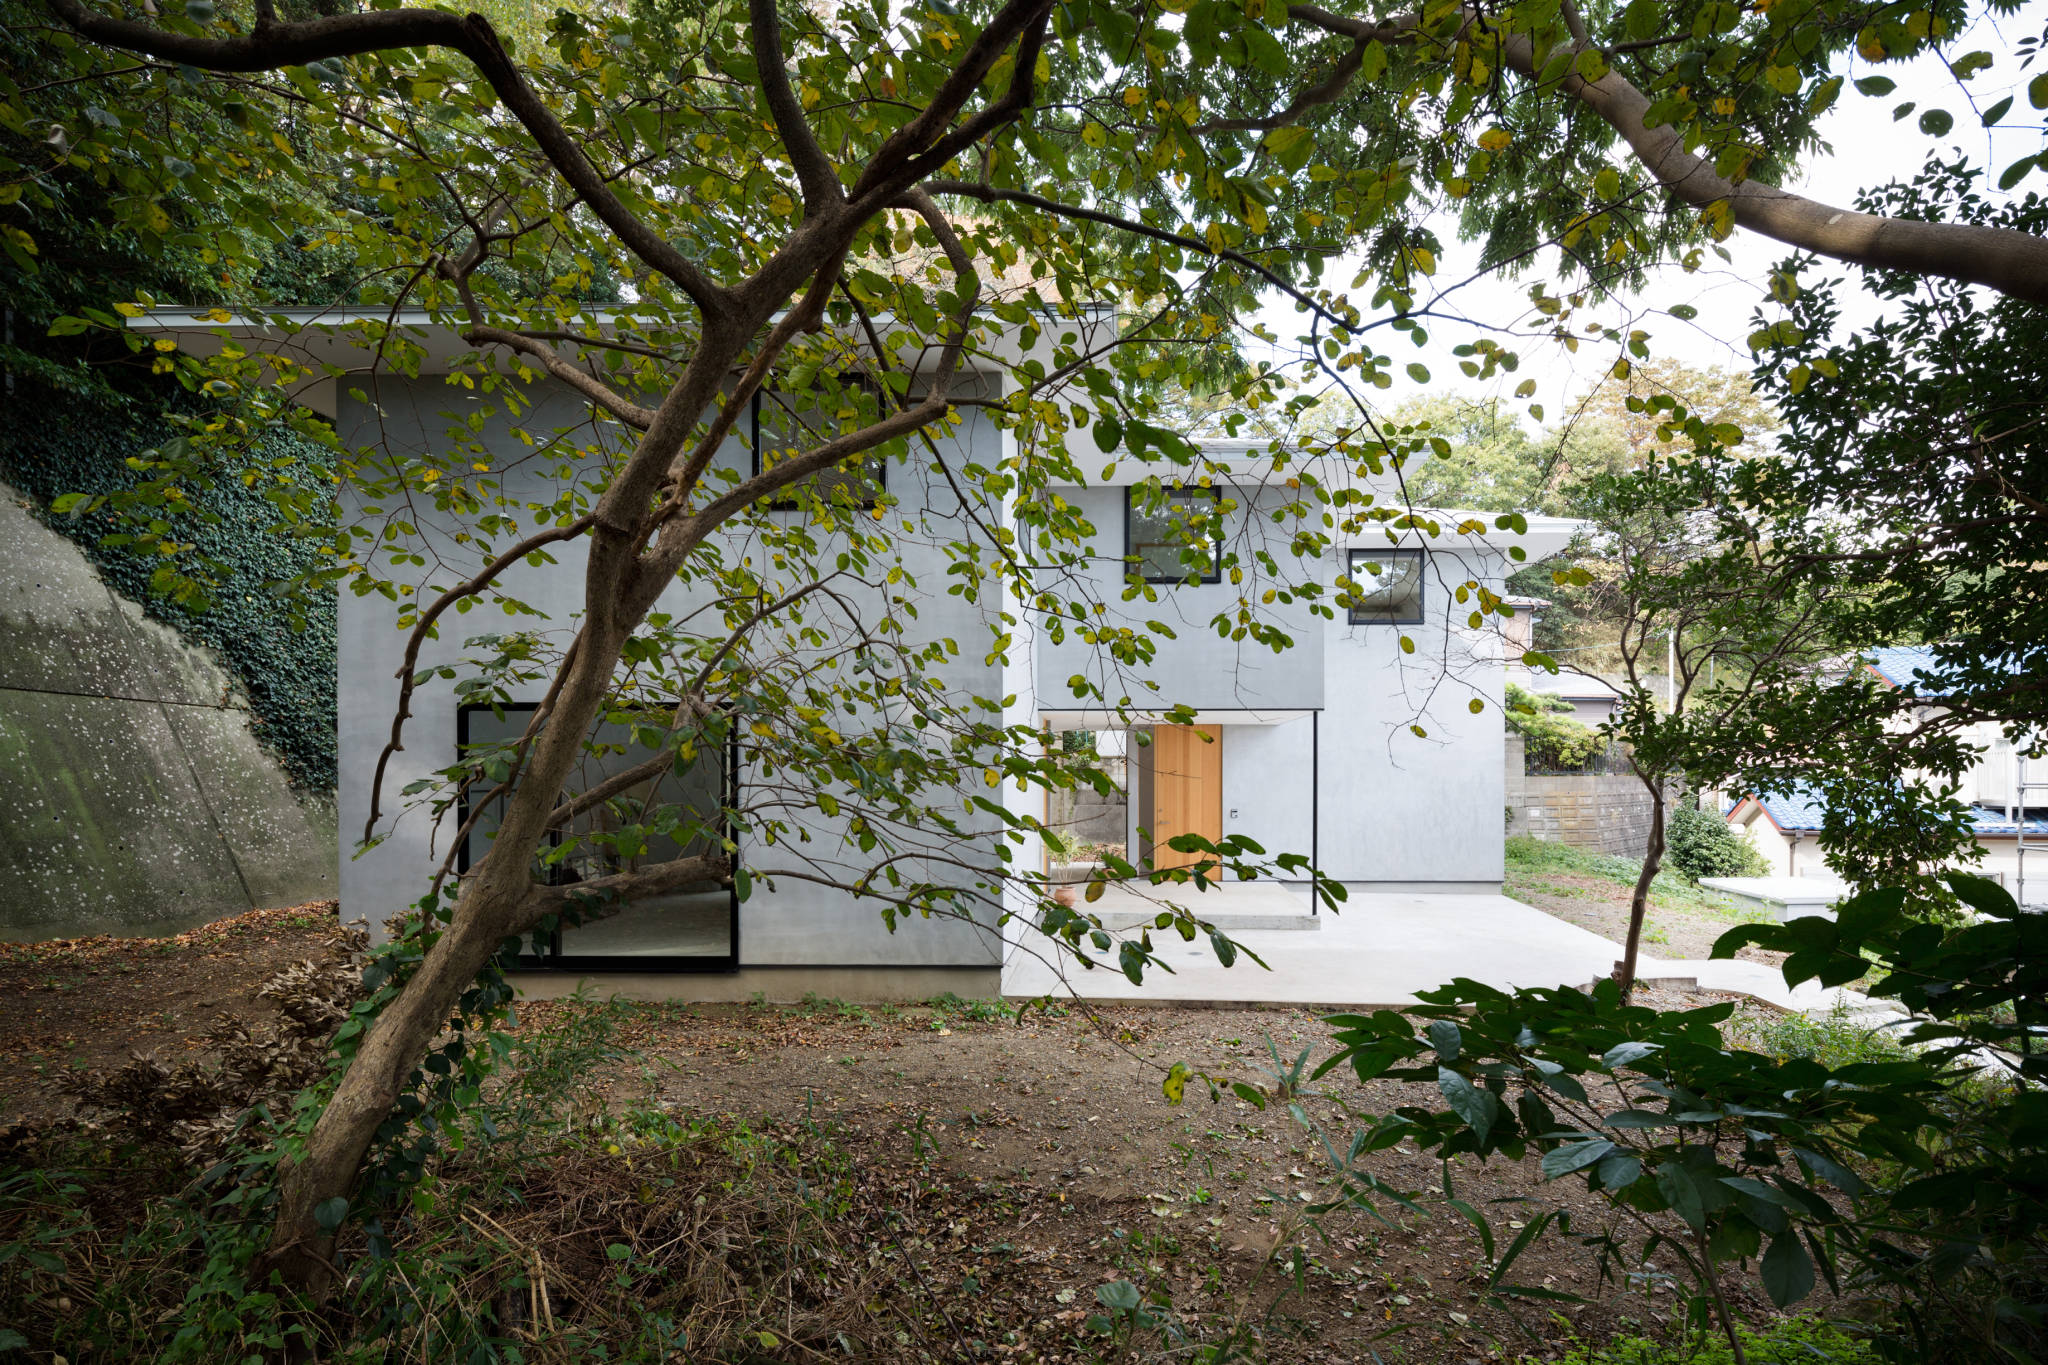 House in Yokosuka by Takashi Kurihara Architects